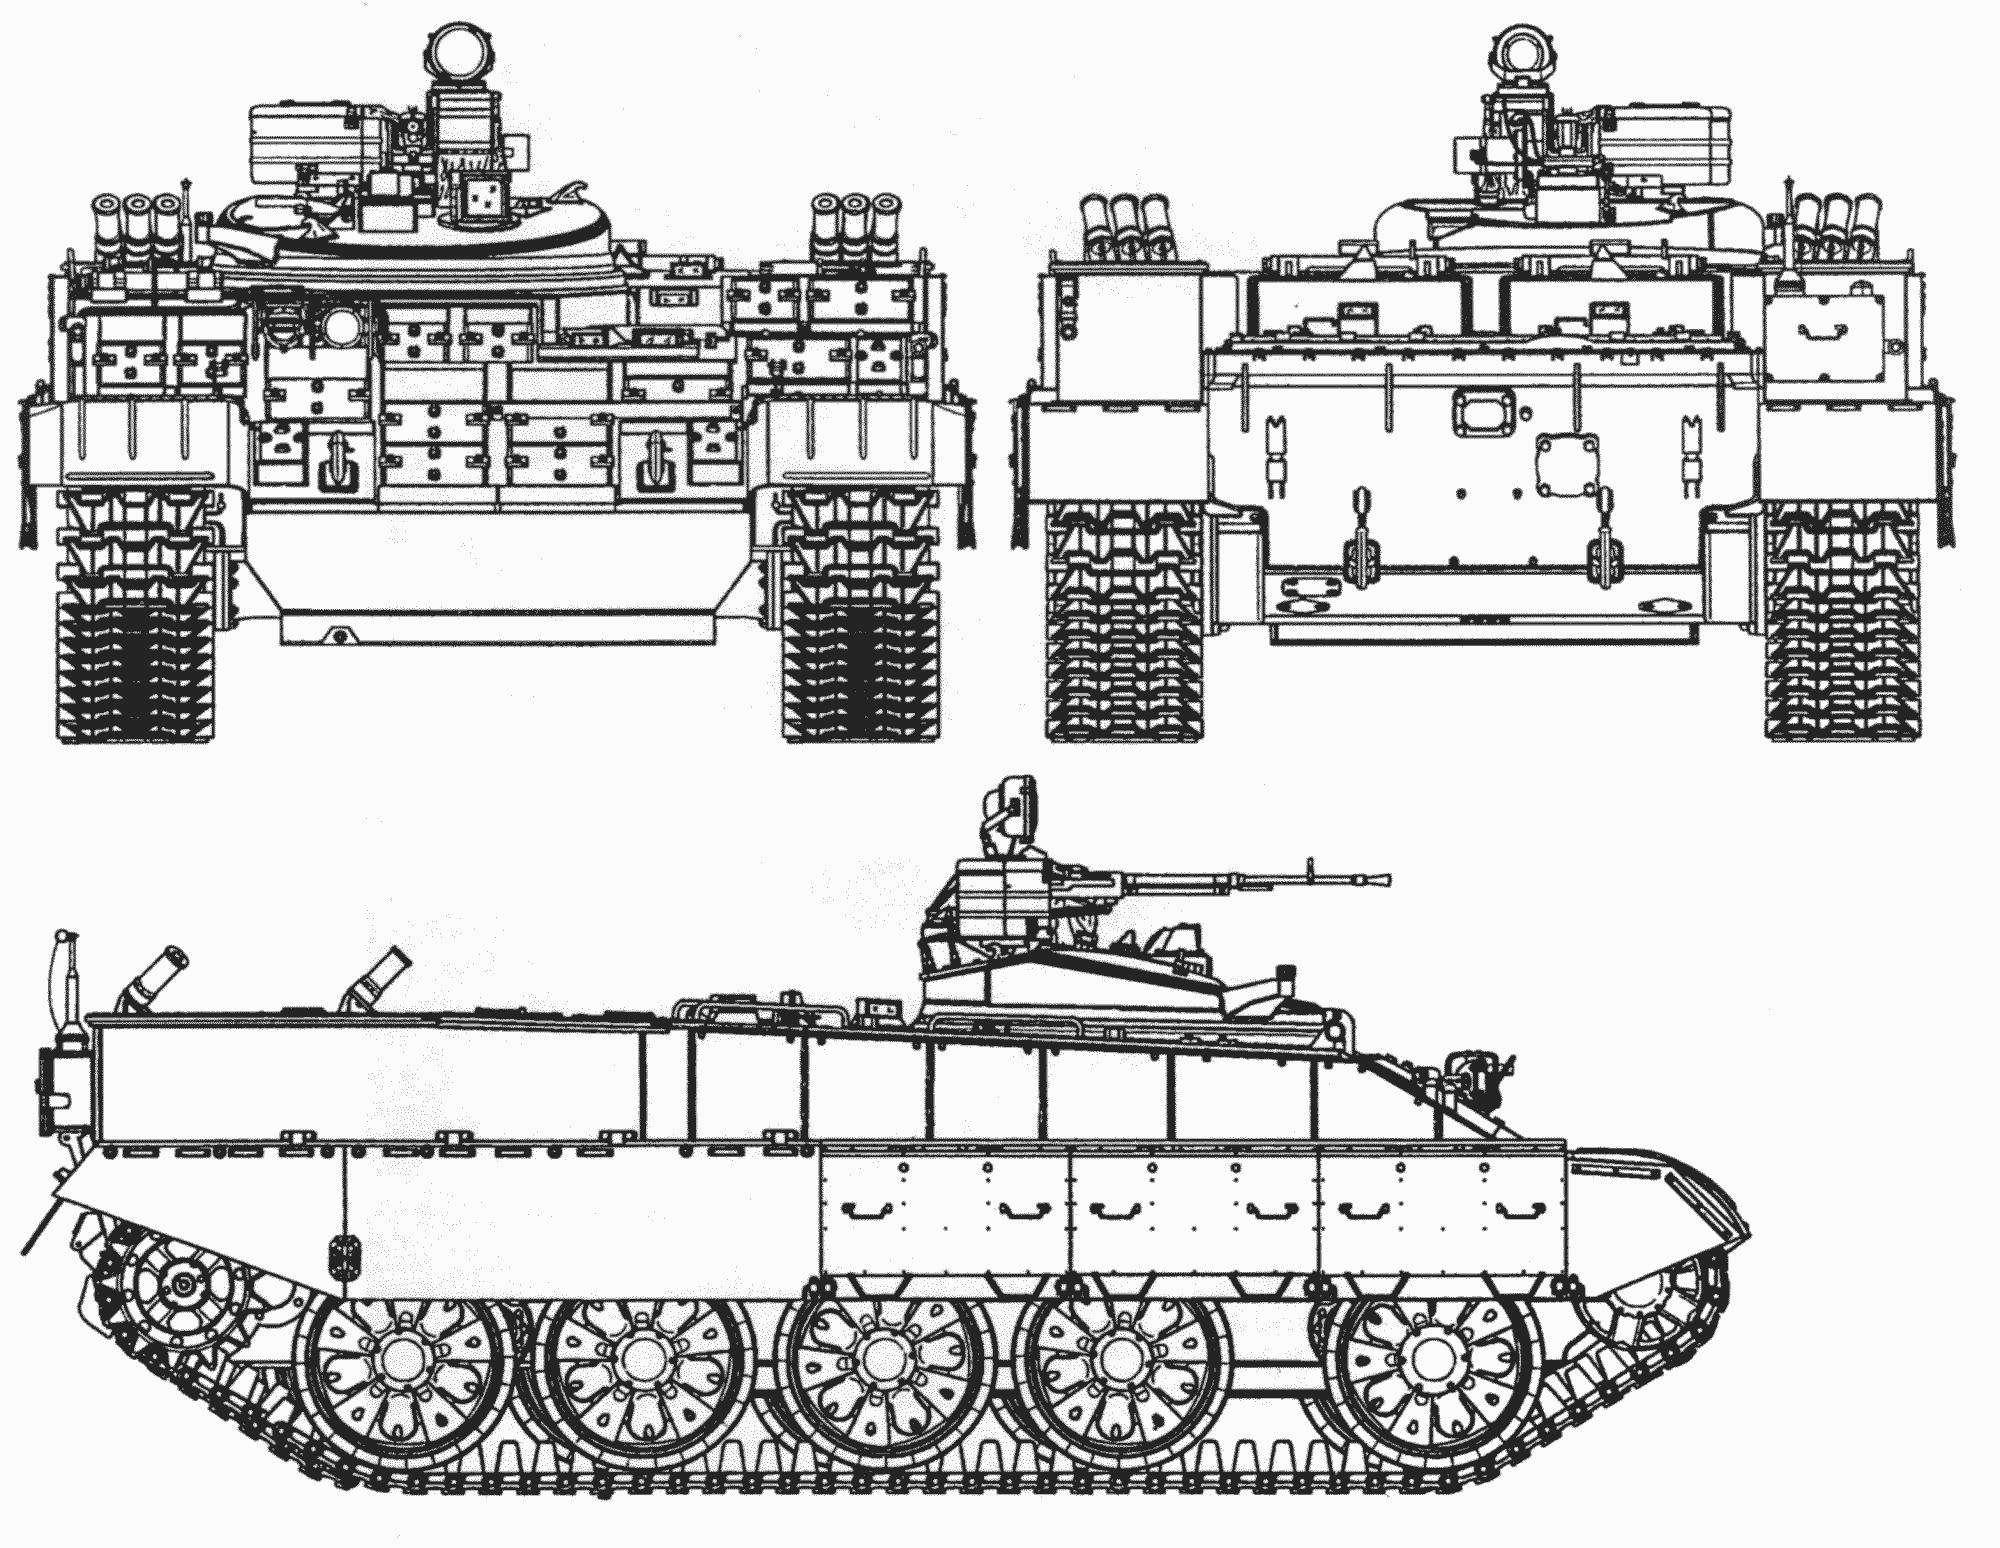 BTR-T blueprint